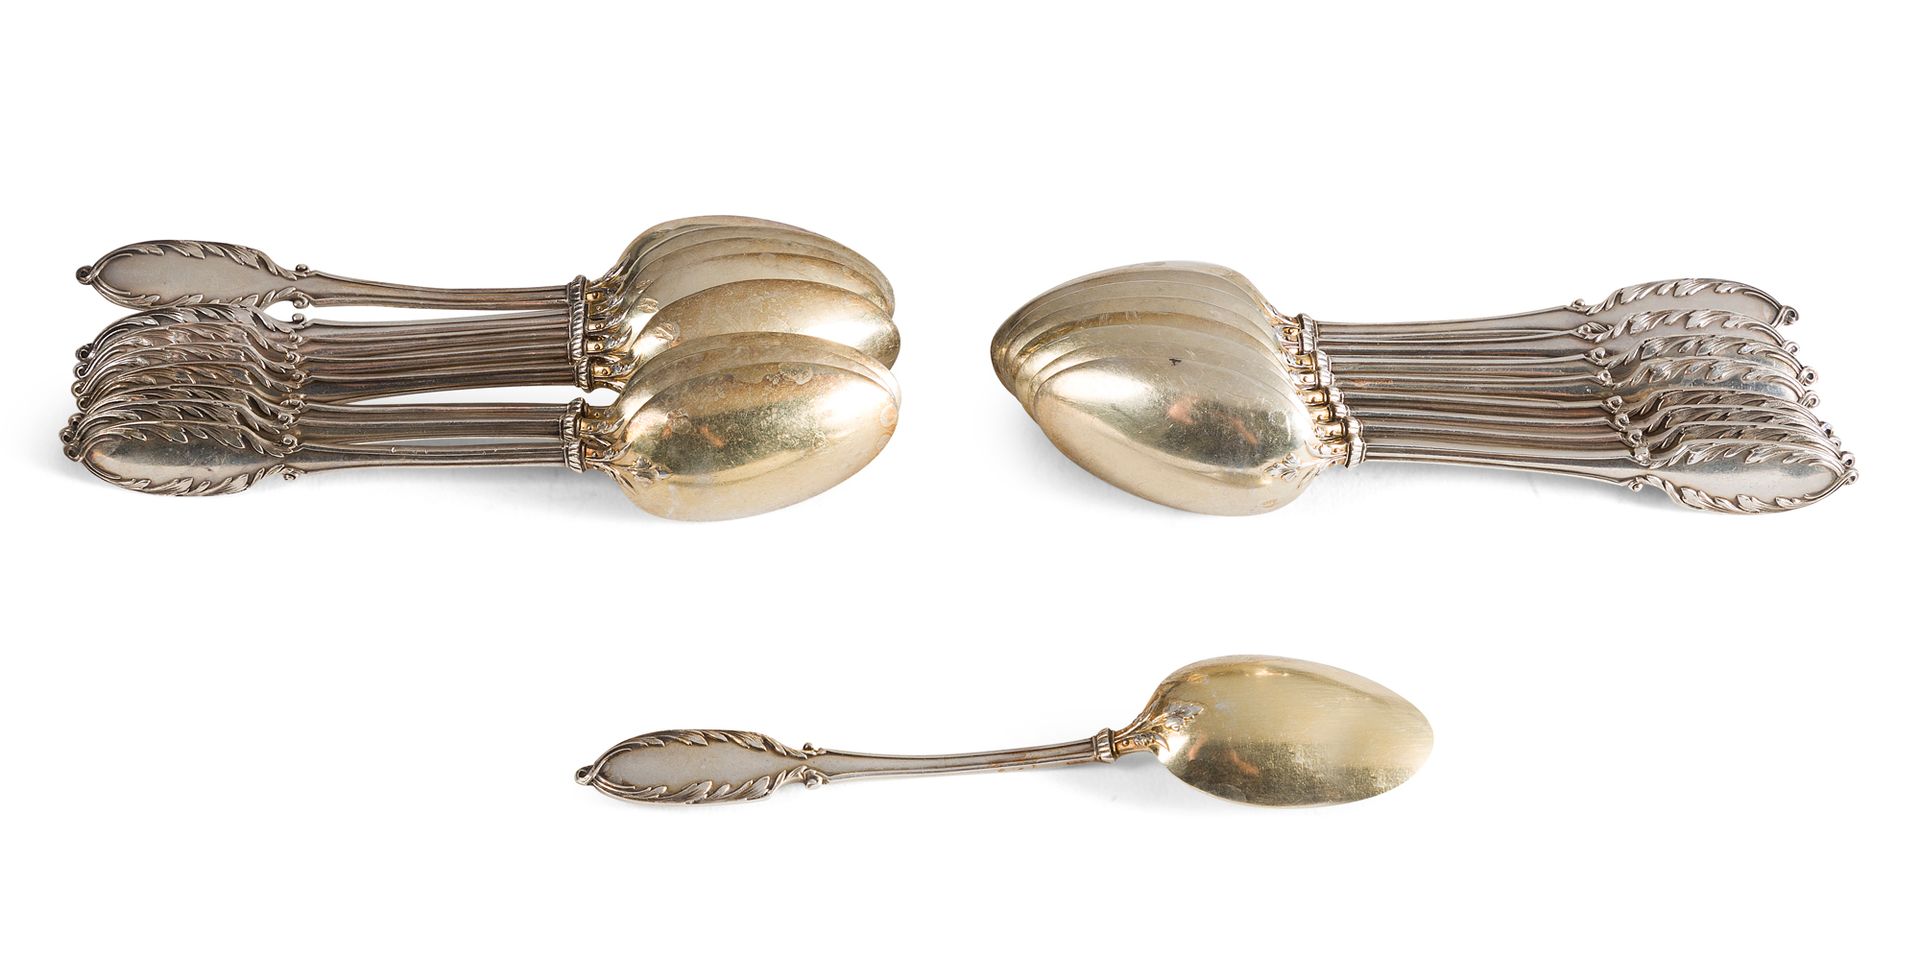 Null 17个银质和银质镀金摩卡勺子（Minerve第一标题），铲子上装饰有风格化的树叶

重量：349克